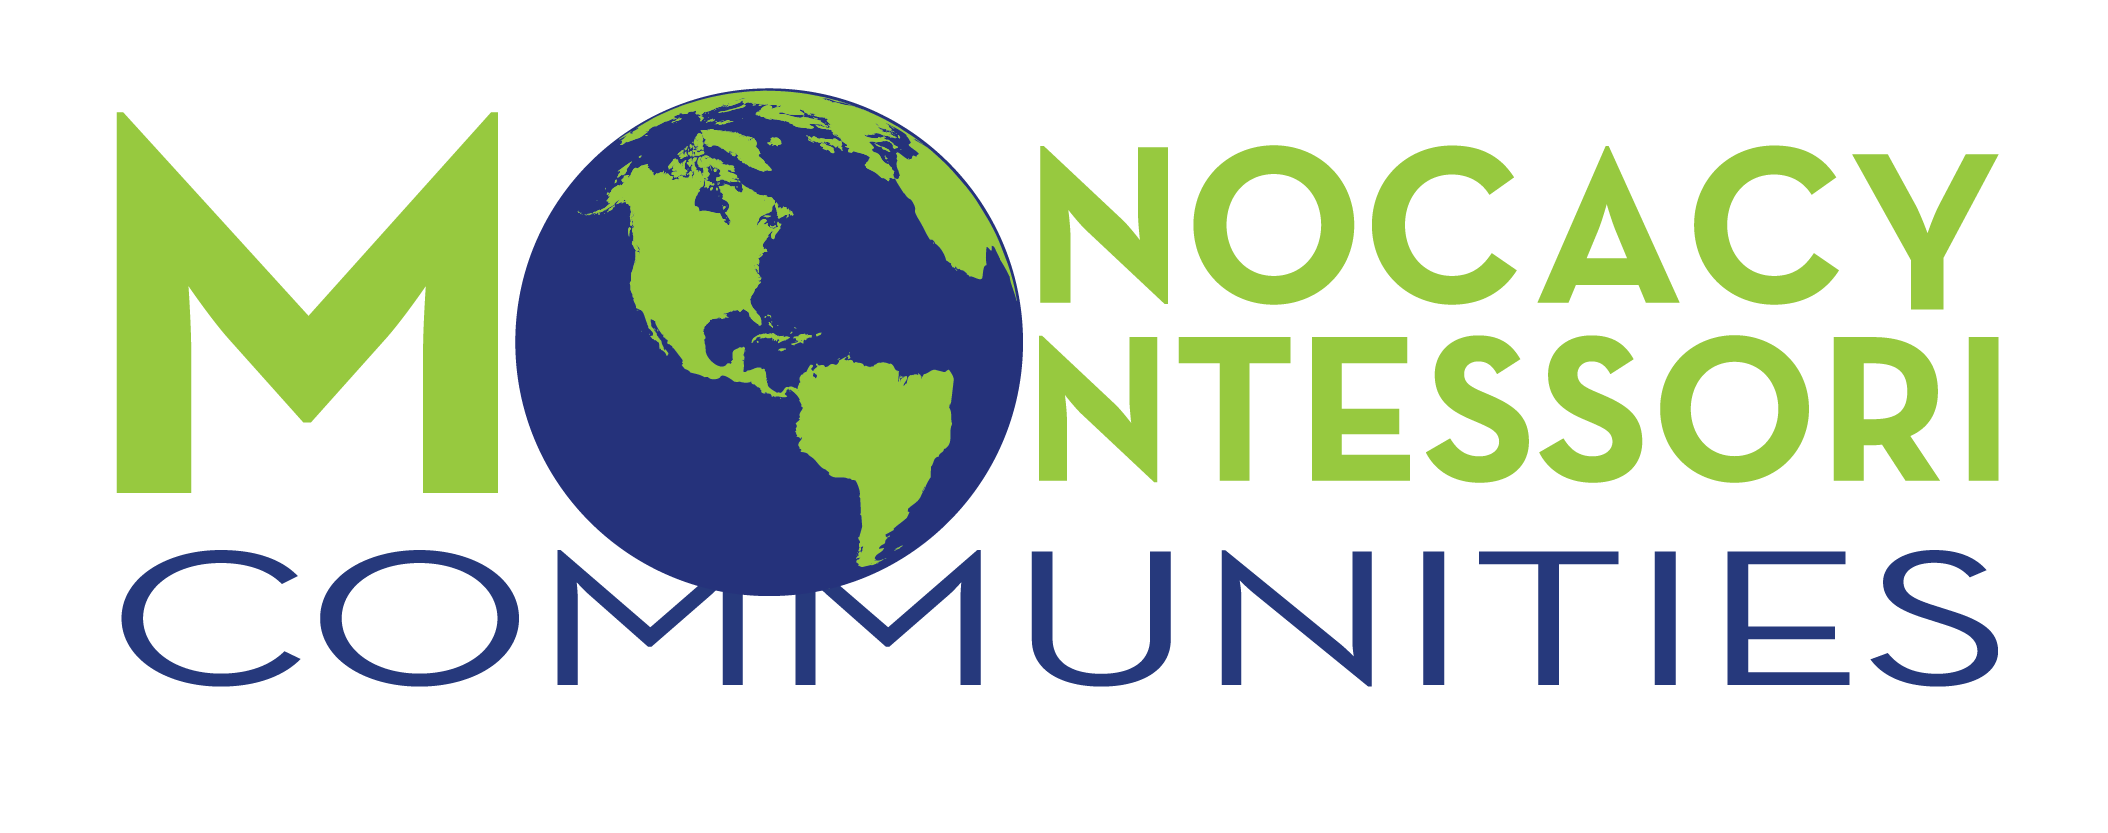 Monocacy Montessori Communities, Inc. logo